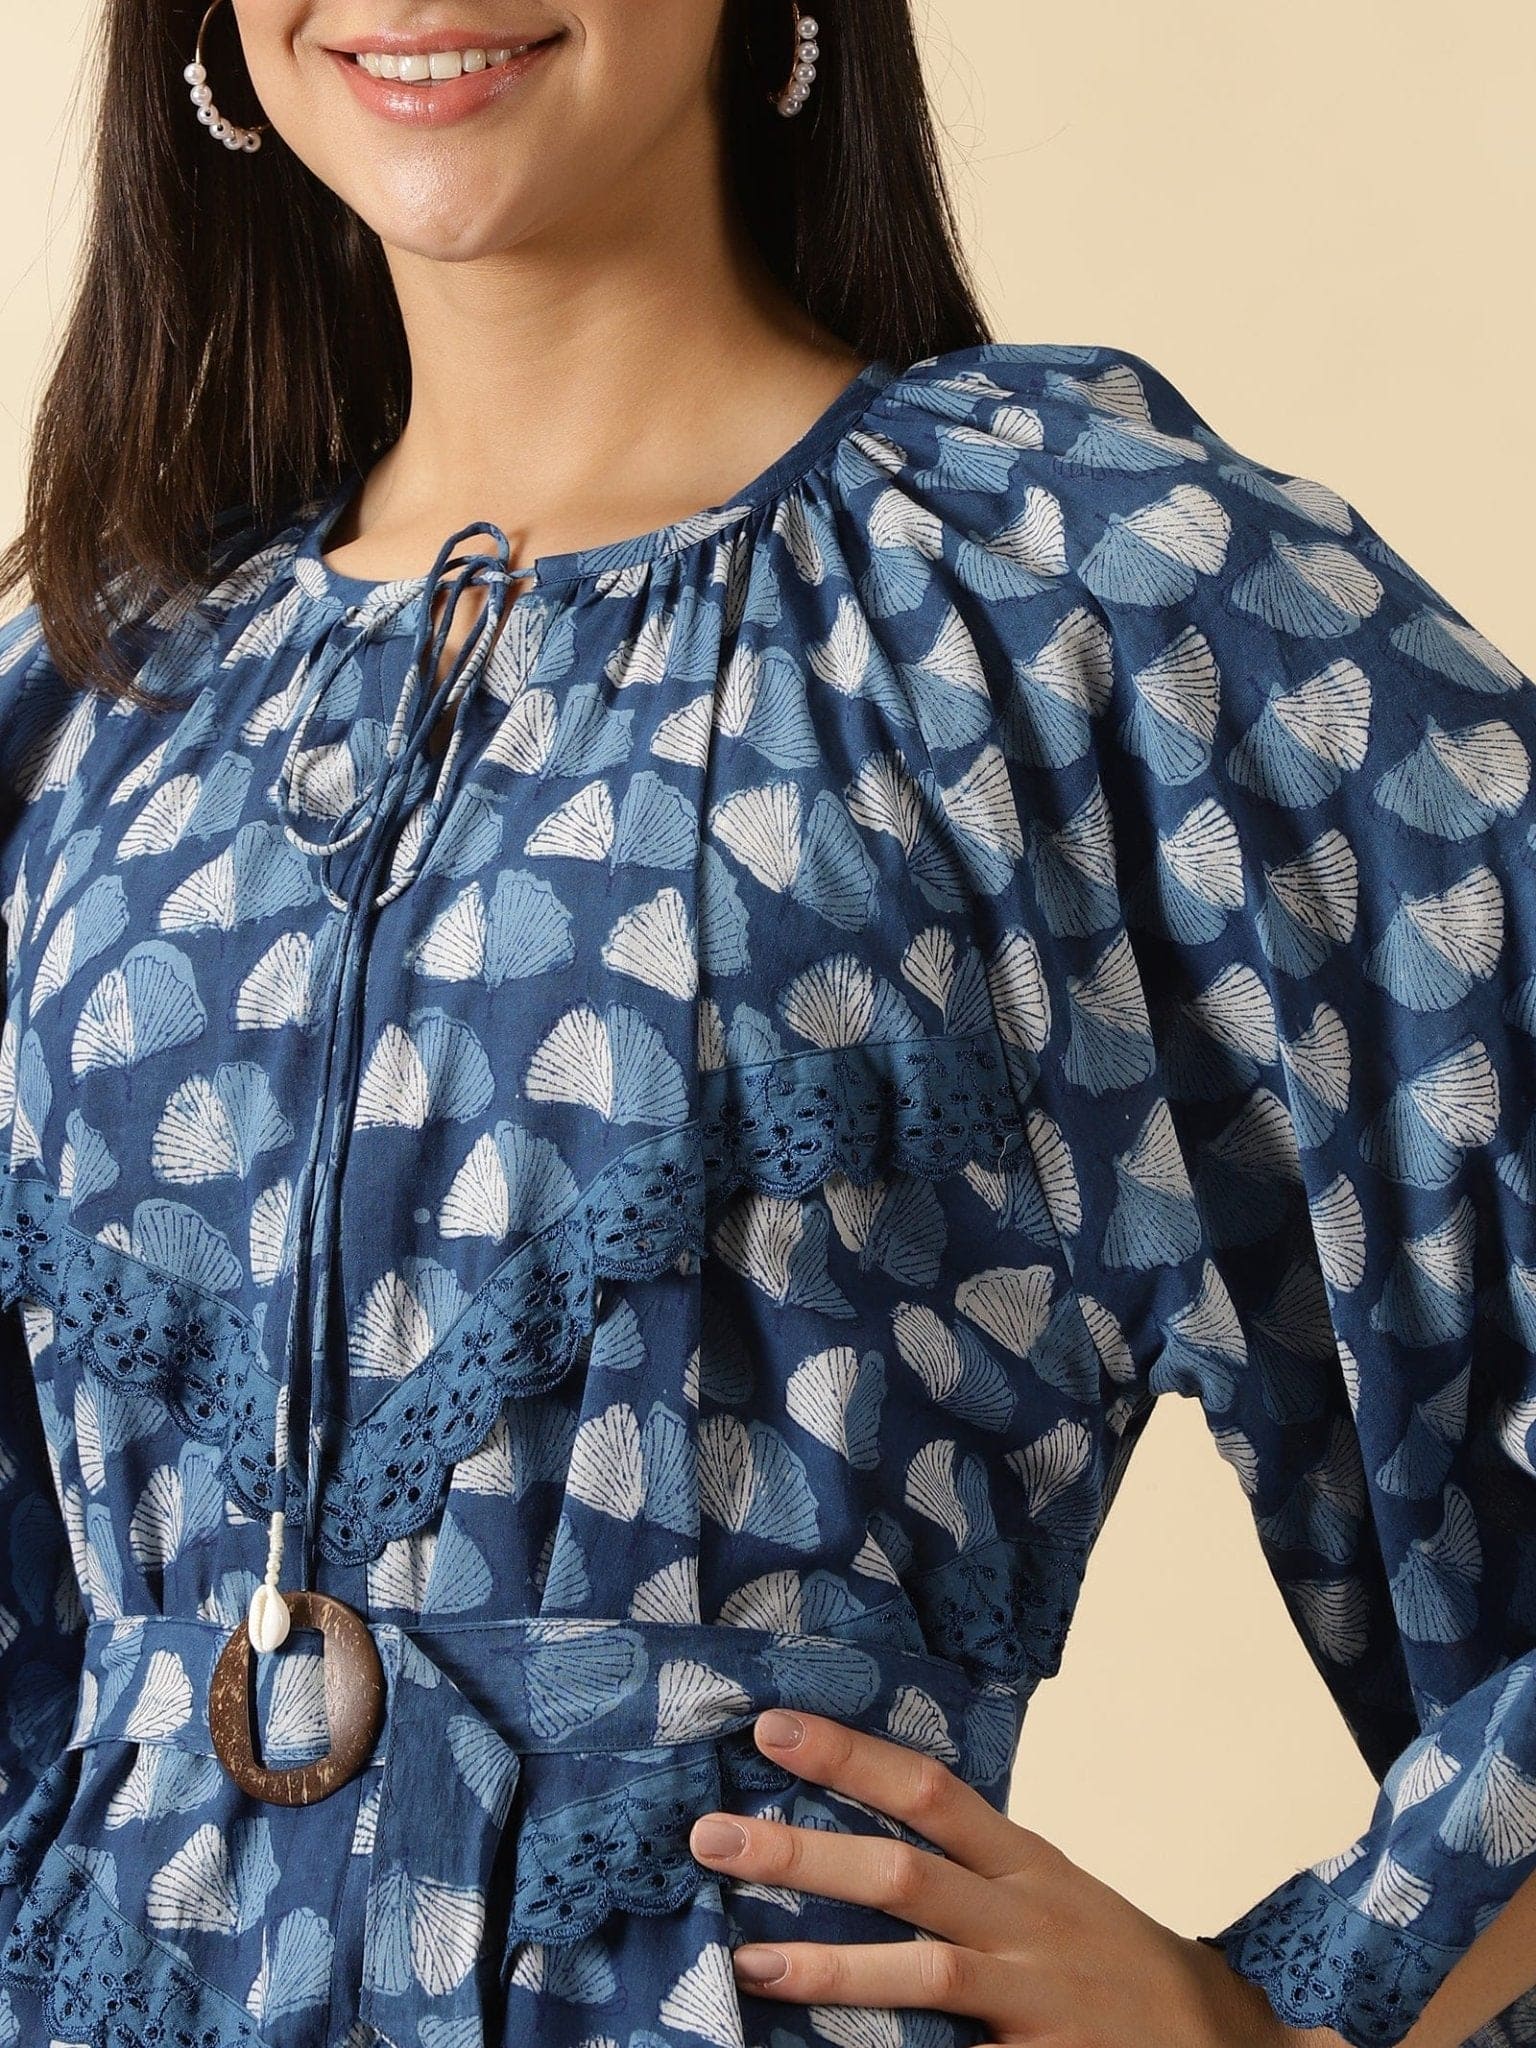 Indigo Blockprinted handkerchief Dress - Charkha TalesIndigo Blockprinted handkerchief Dress